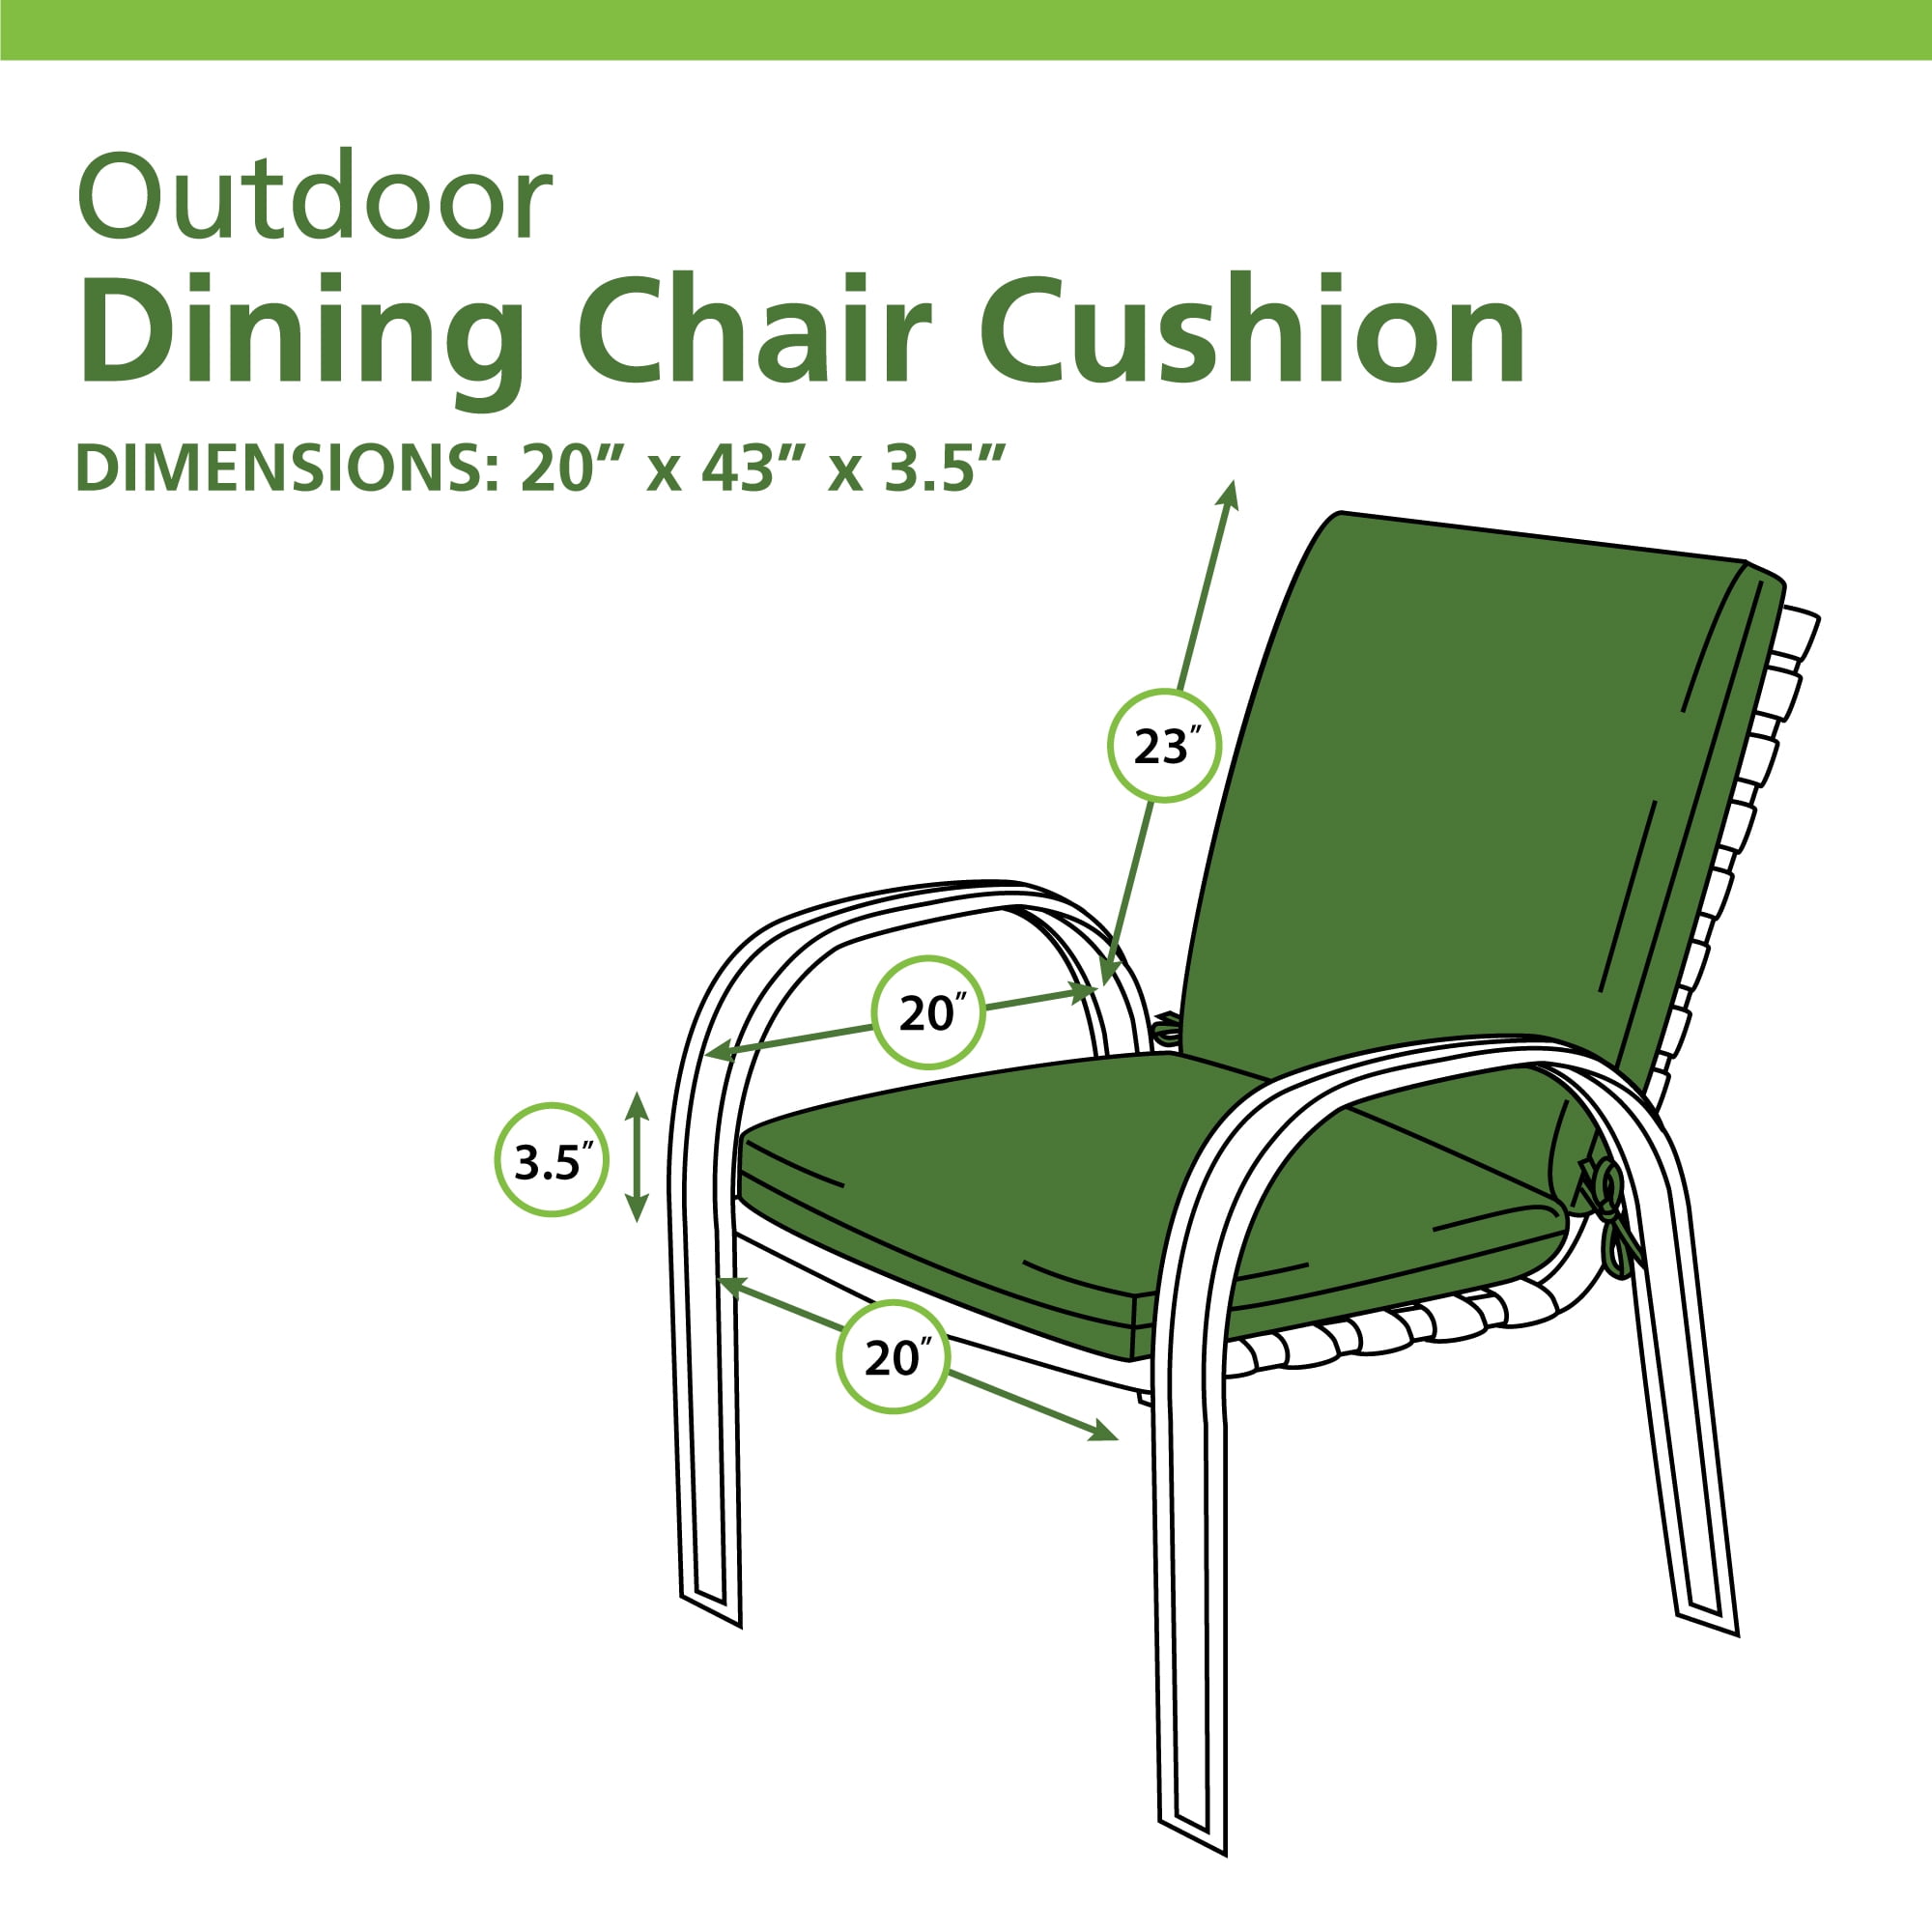 CareActive Total Chair Cushion Light Blue (207-0-LBL)